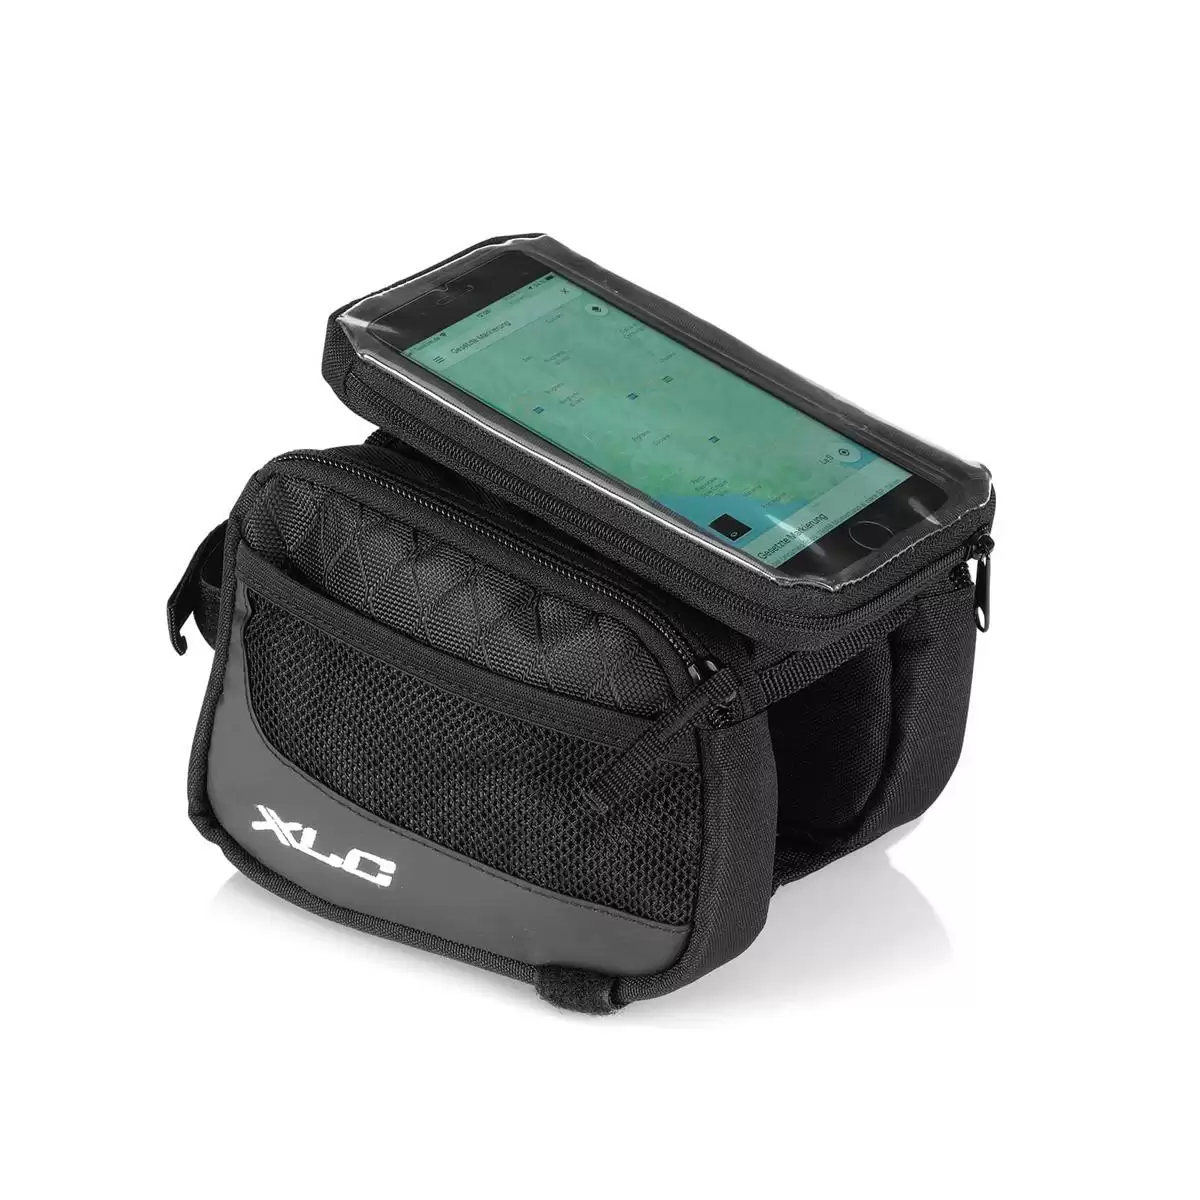 Bolsa para smartphone BA-S97 frame mount 0,8lt negro - image